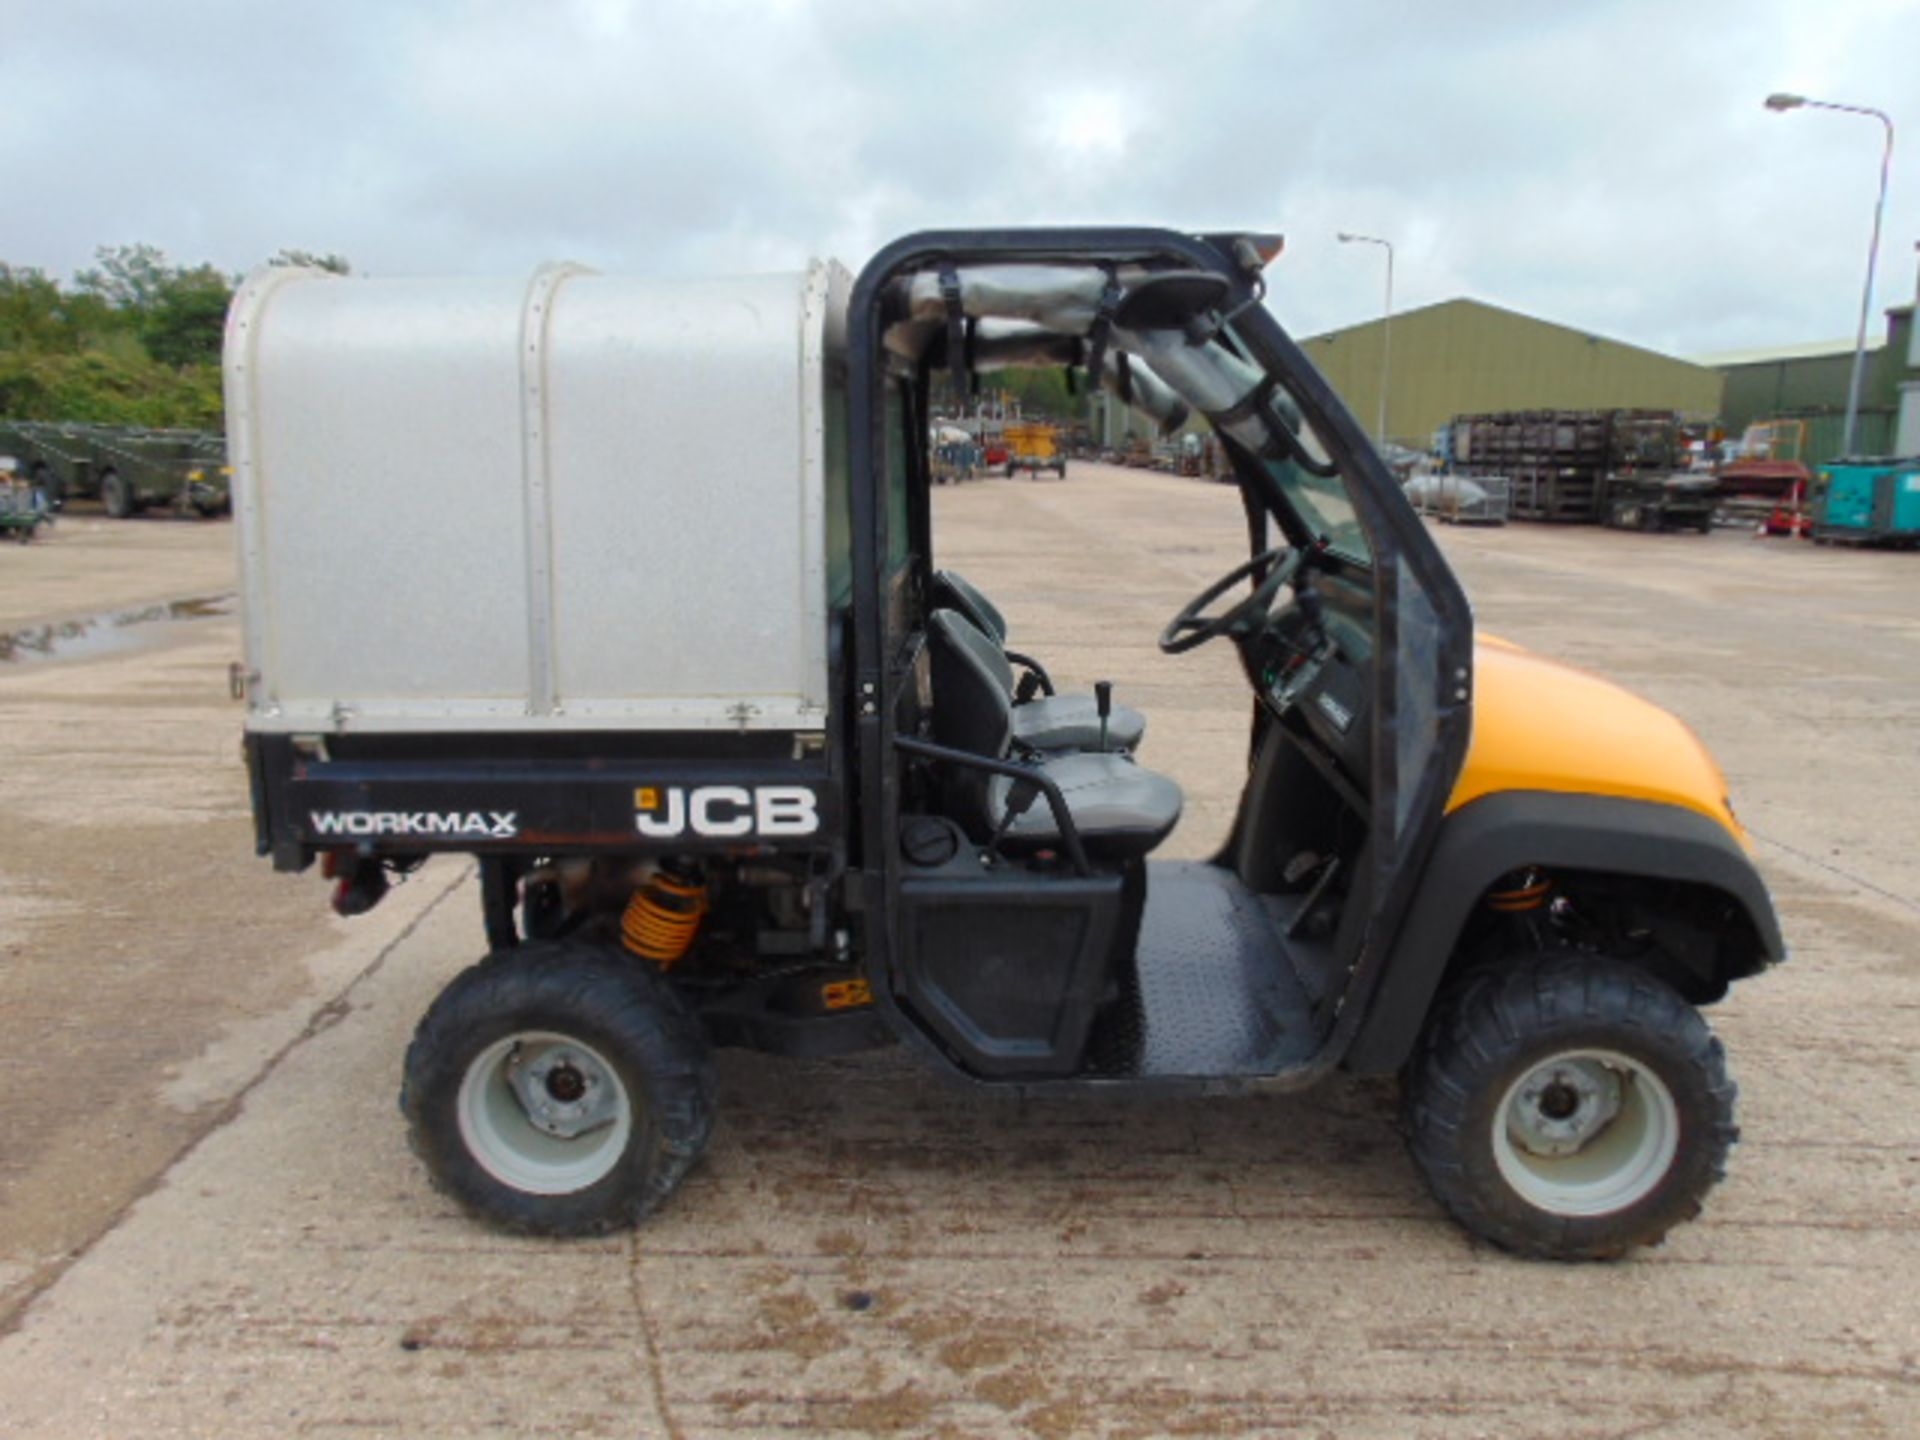 JCB Workmax 1000D 4WD Diesel Utility Vehicle UTV with Aluminium Rear Body - Image 8 of 21